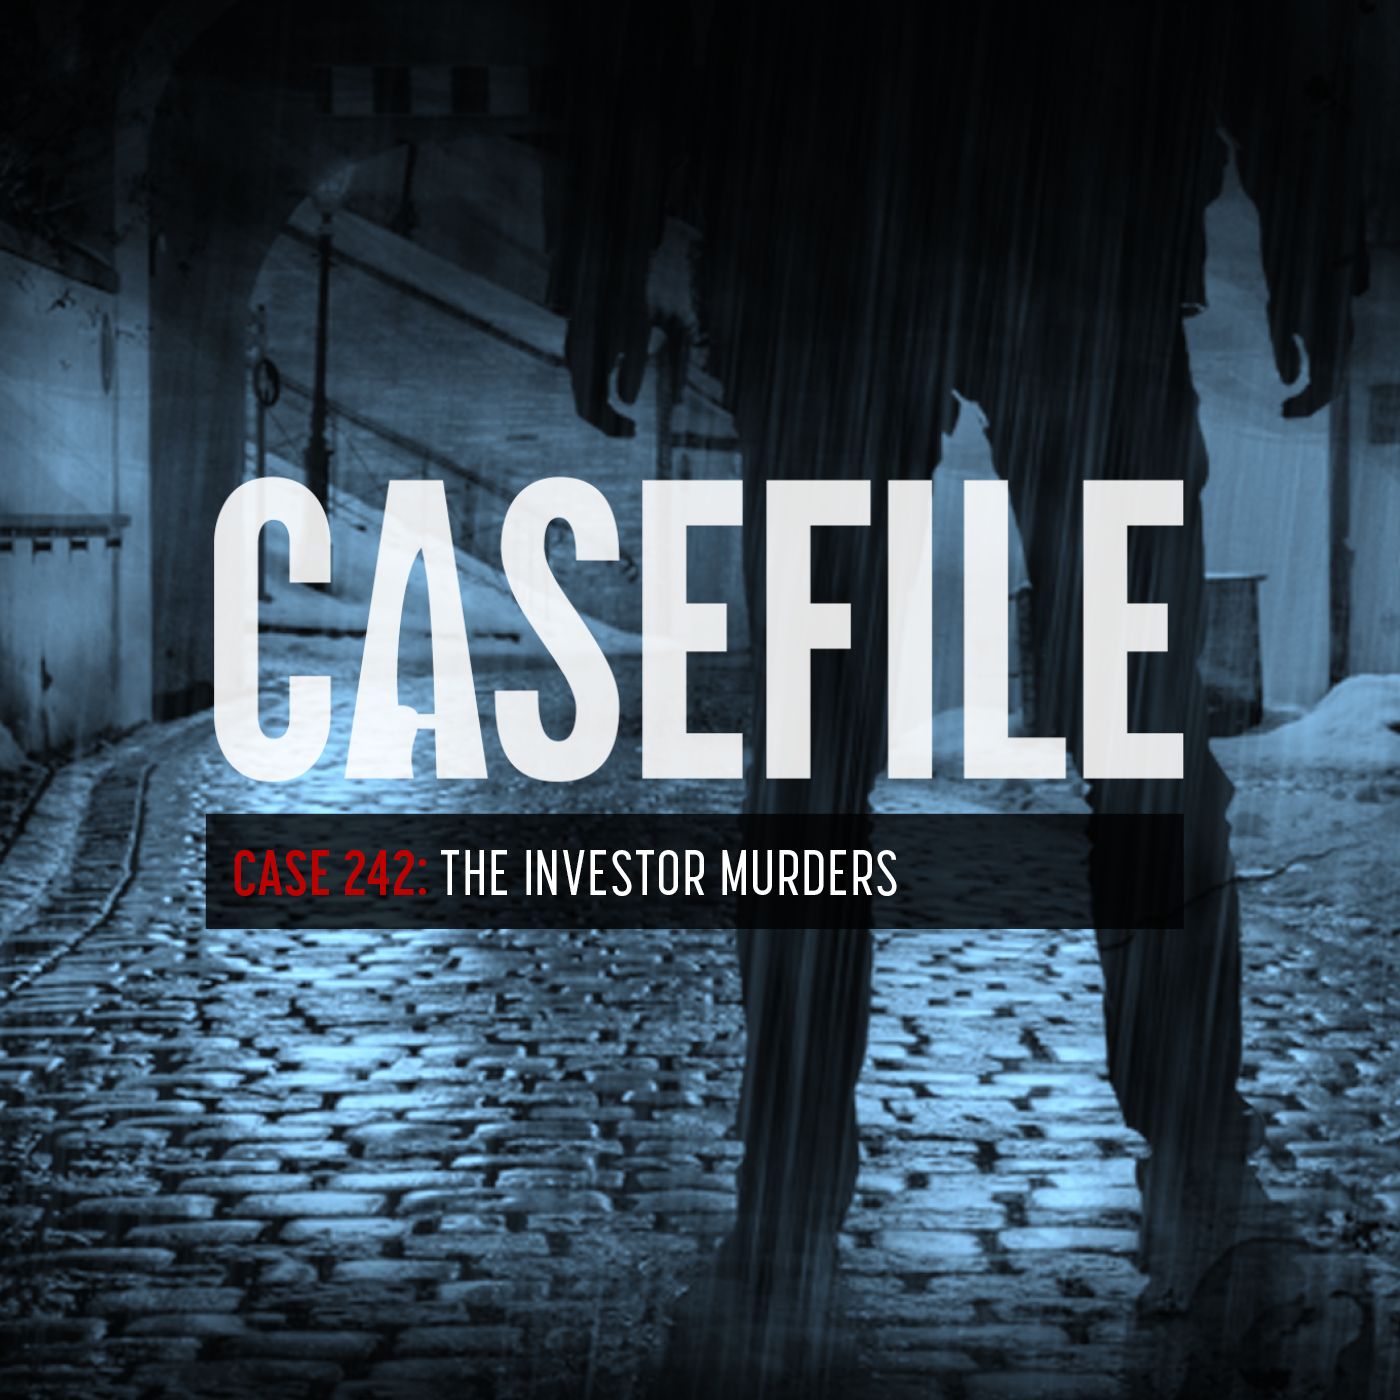 Case 242: The Investor Murders